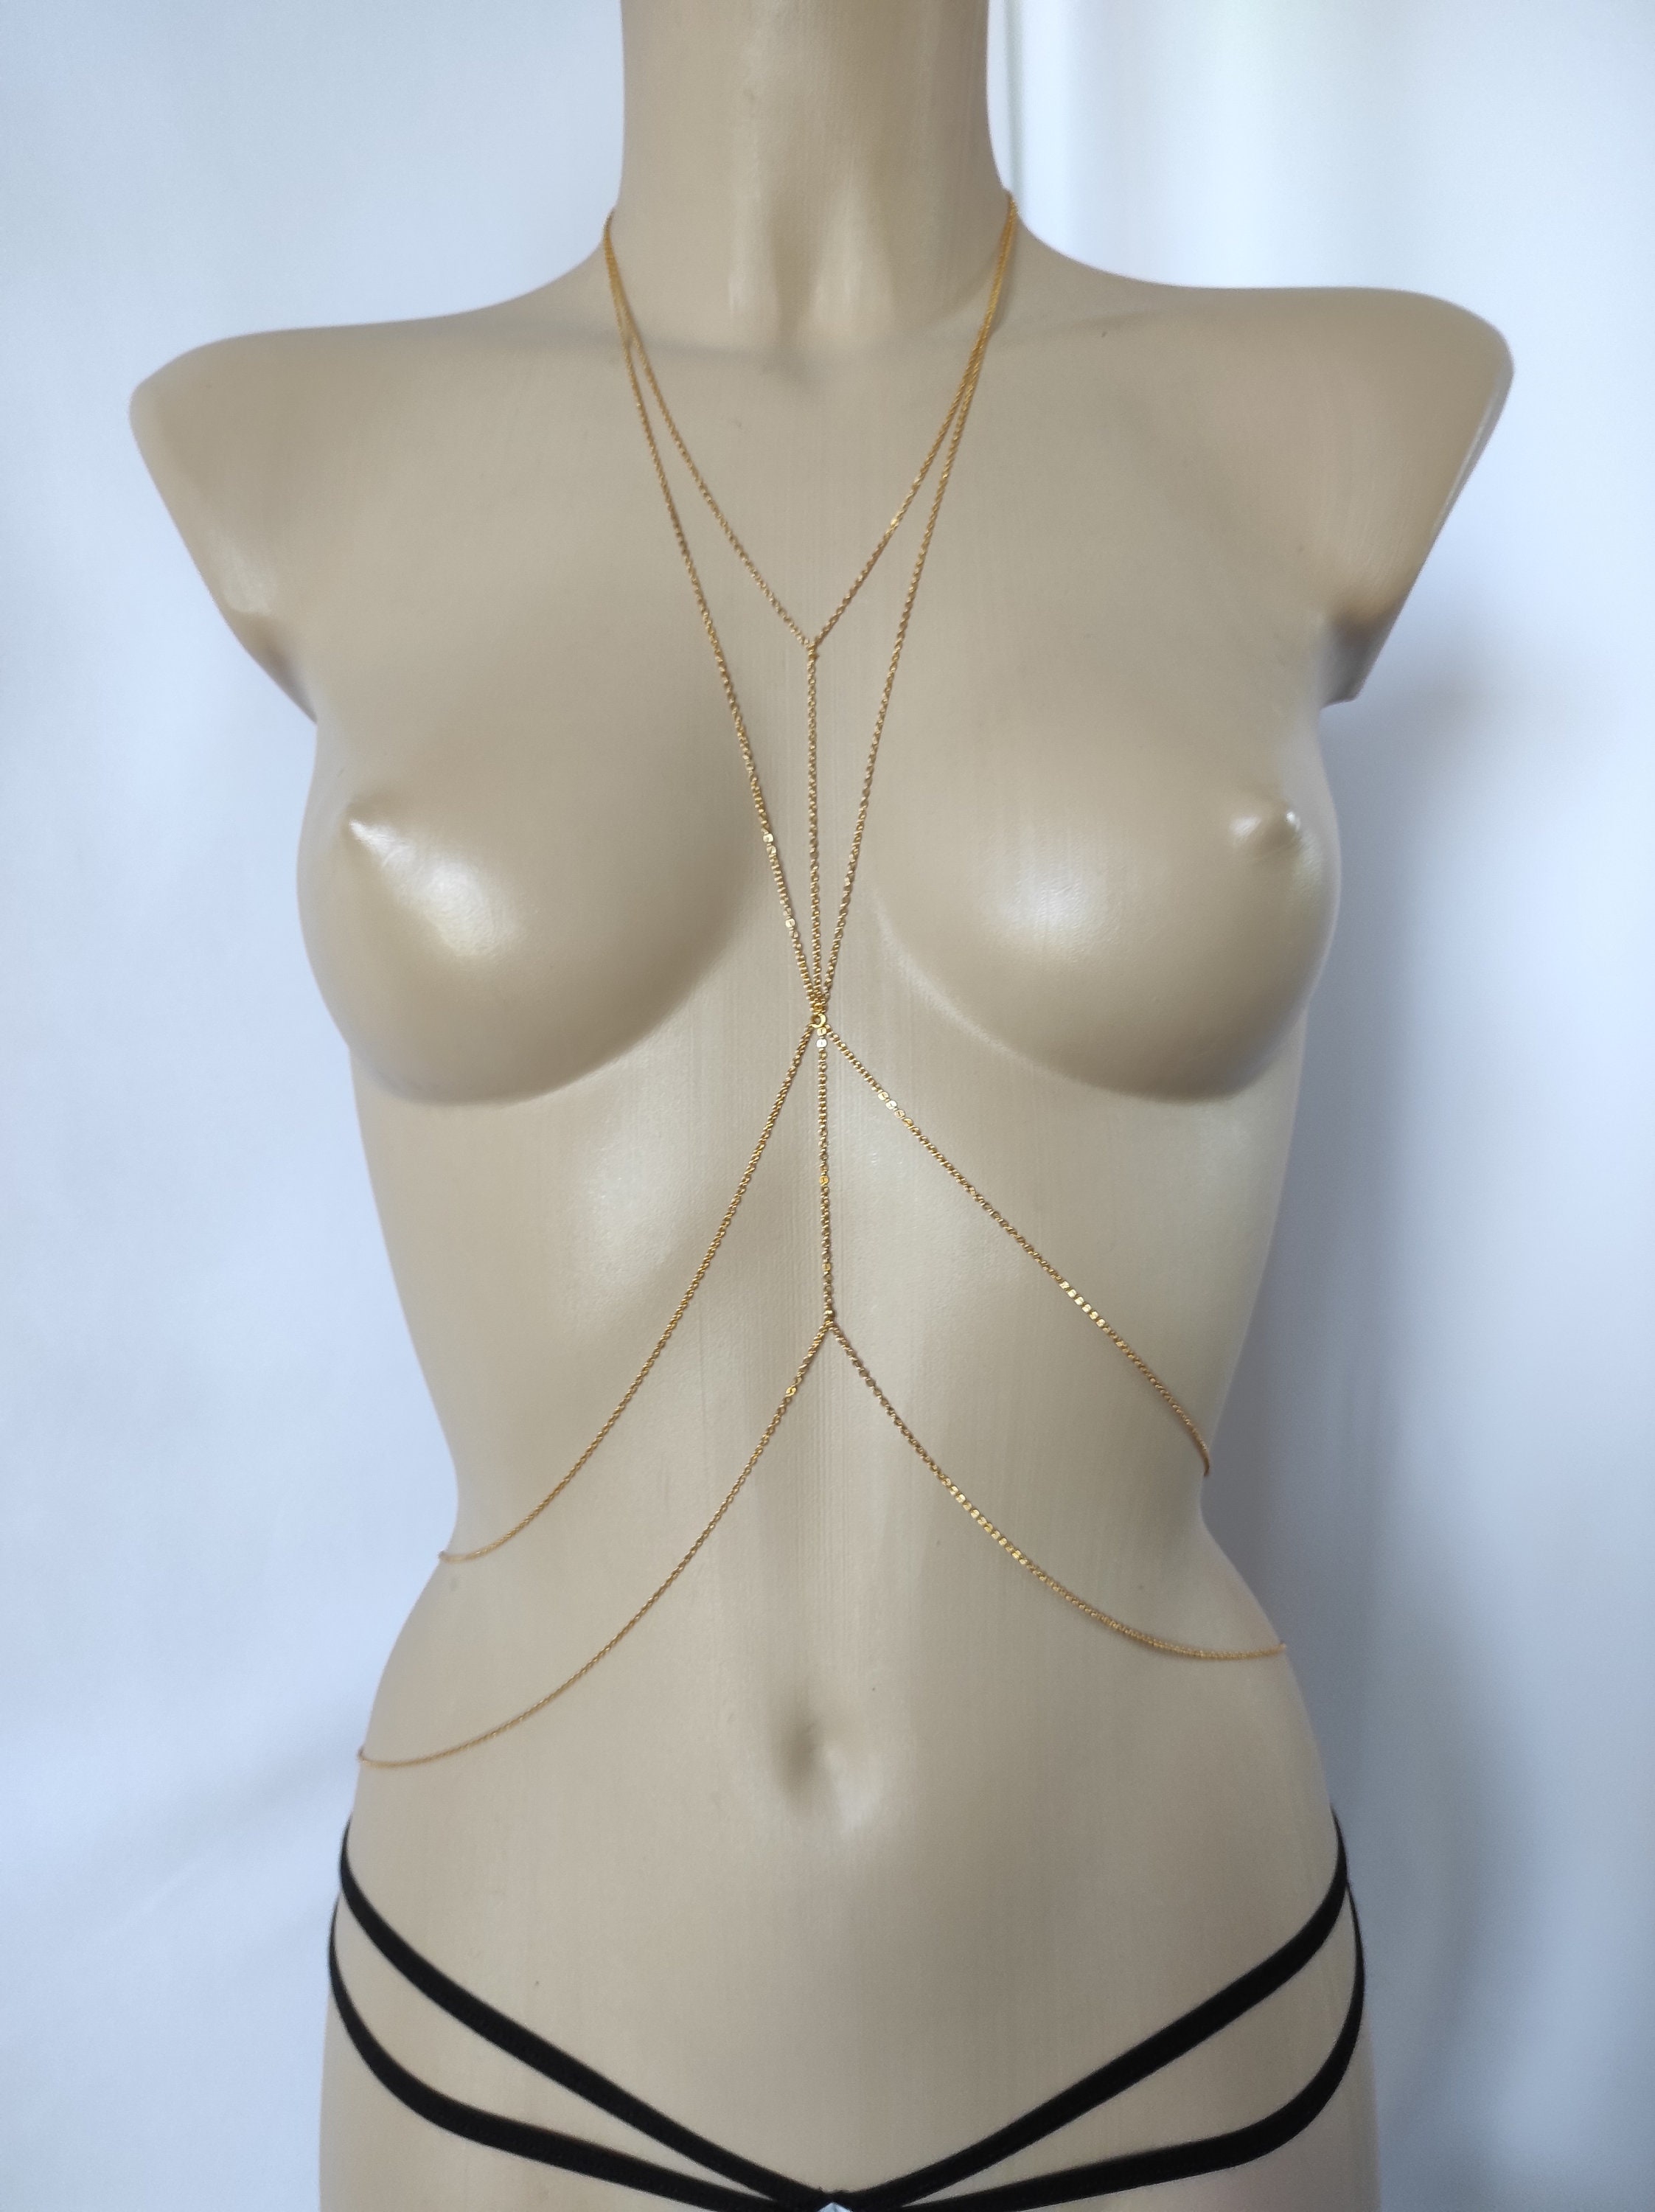 Bmirth Sexy Body Chain Silver Bikini Bra Chain Beach Waist Belly Chain Body  Jewelry for Women and Girls (D)